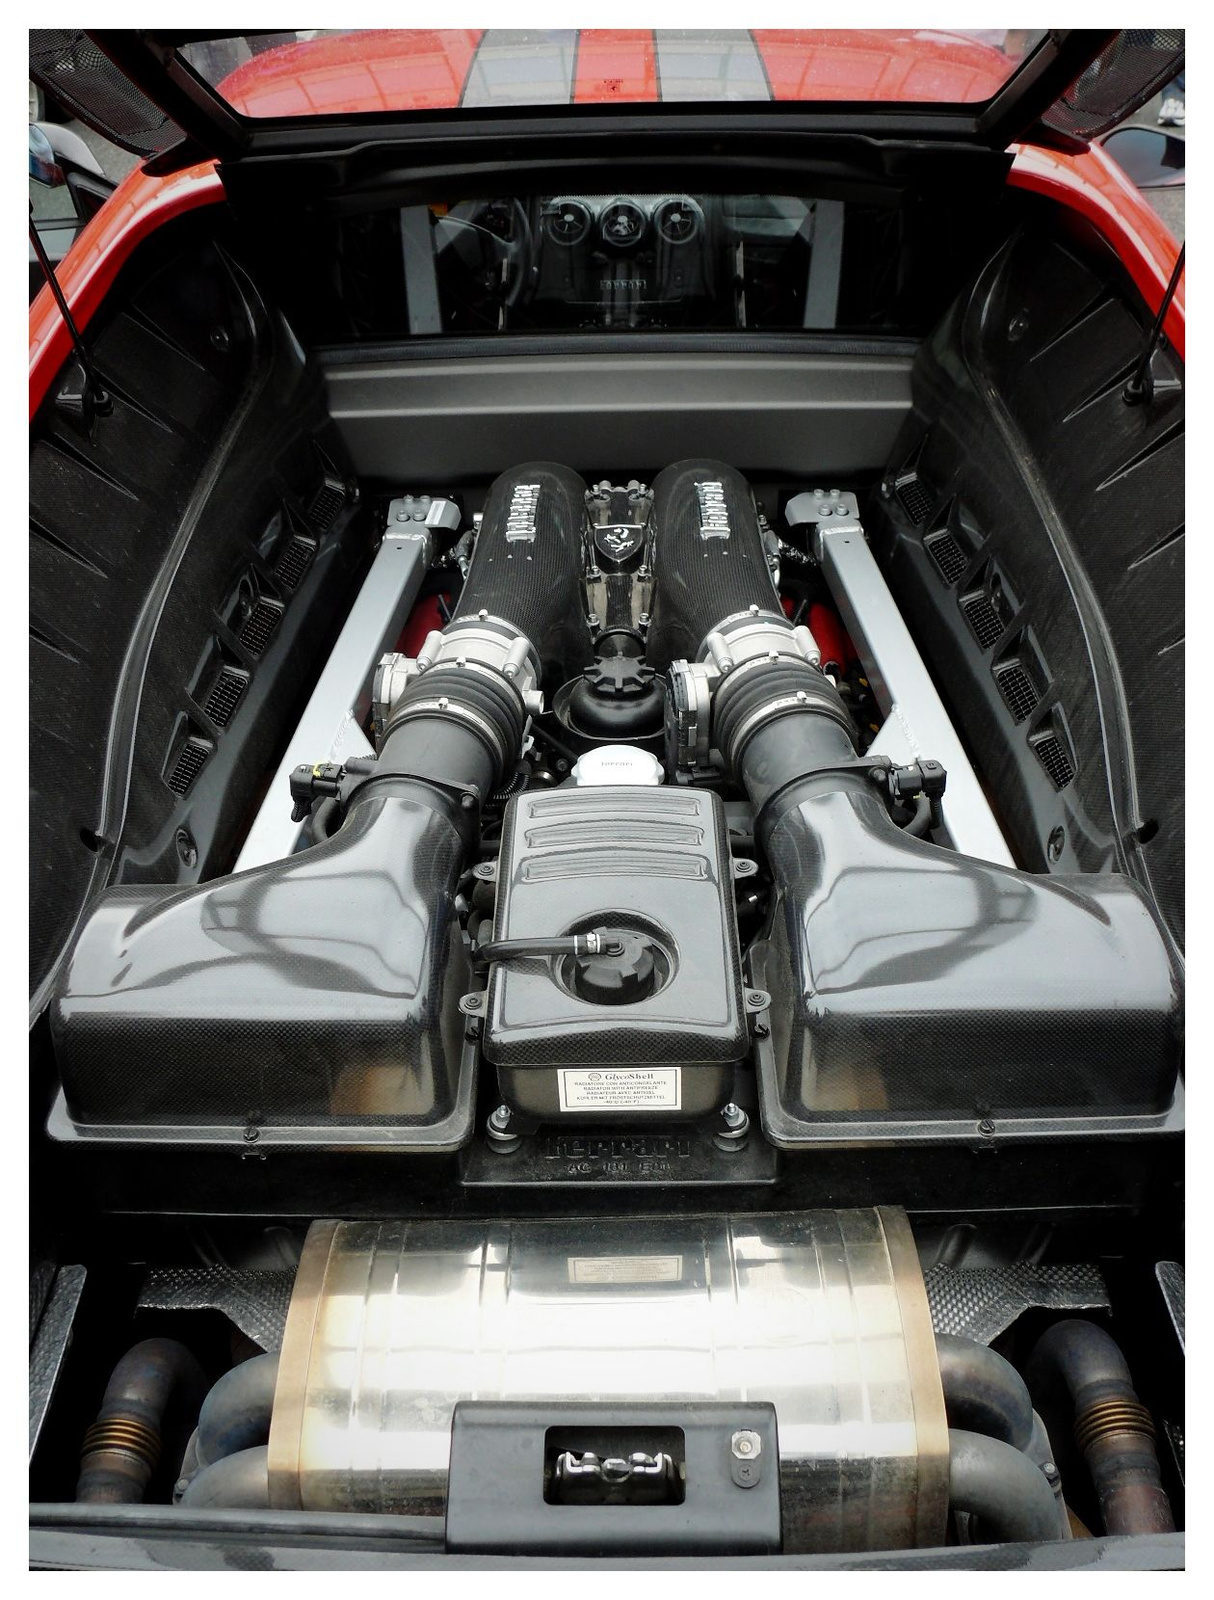 Ferrari 430 Scuderia motor